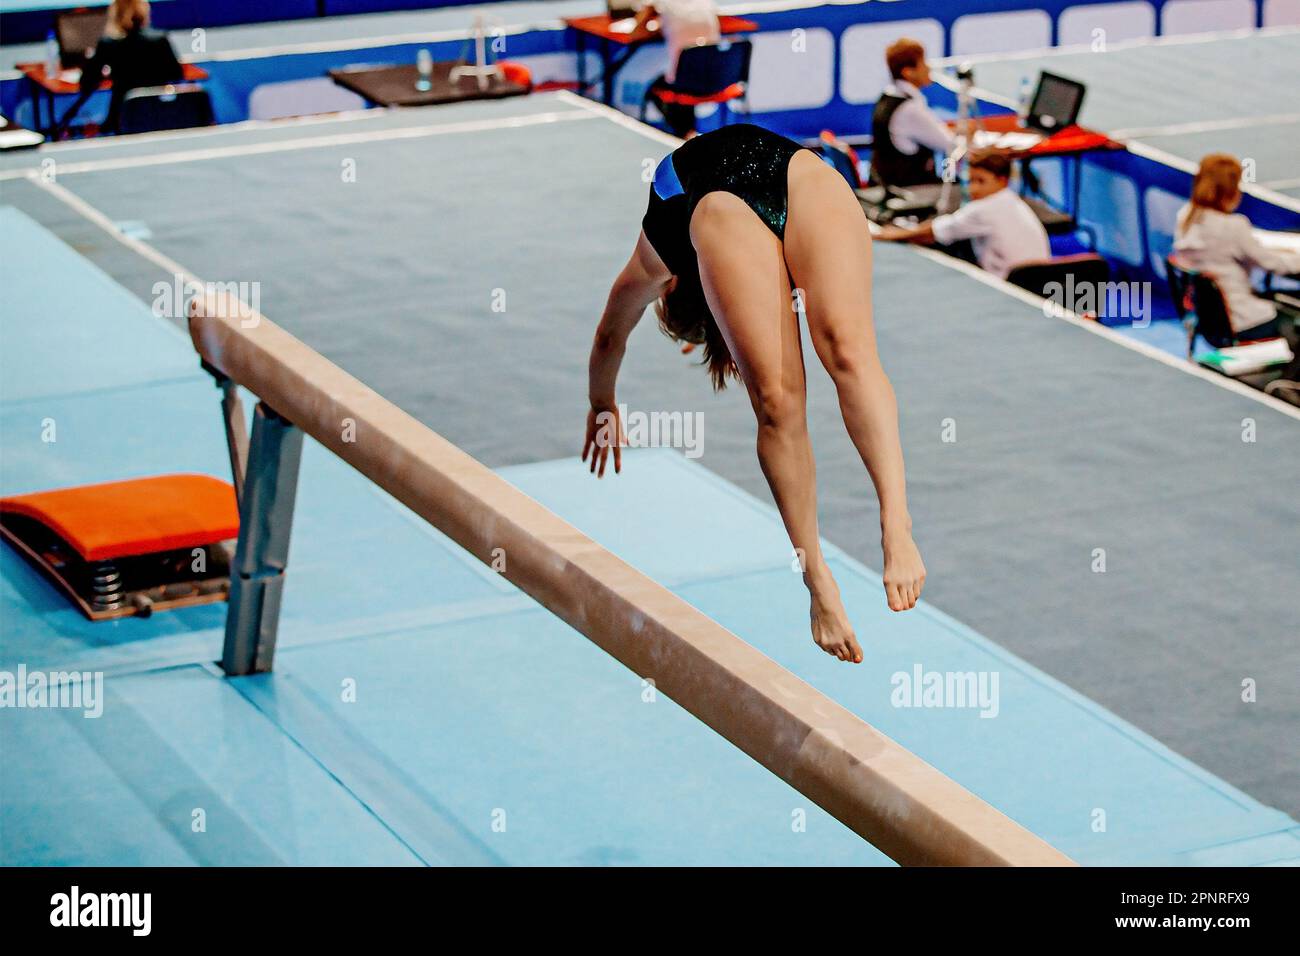 female gymnast exercise acrobatic element on balance beam in artistic gymnastics, summer sports games Stock Photo